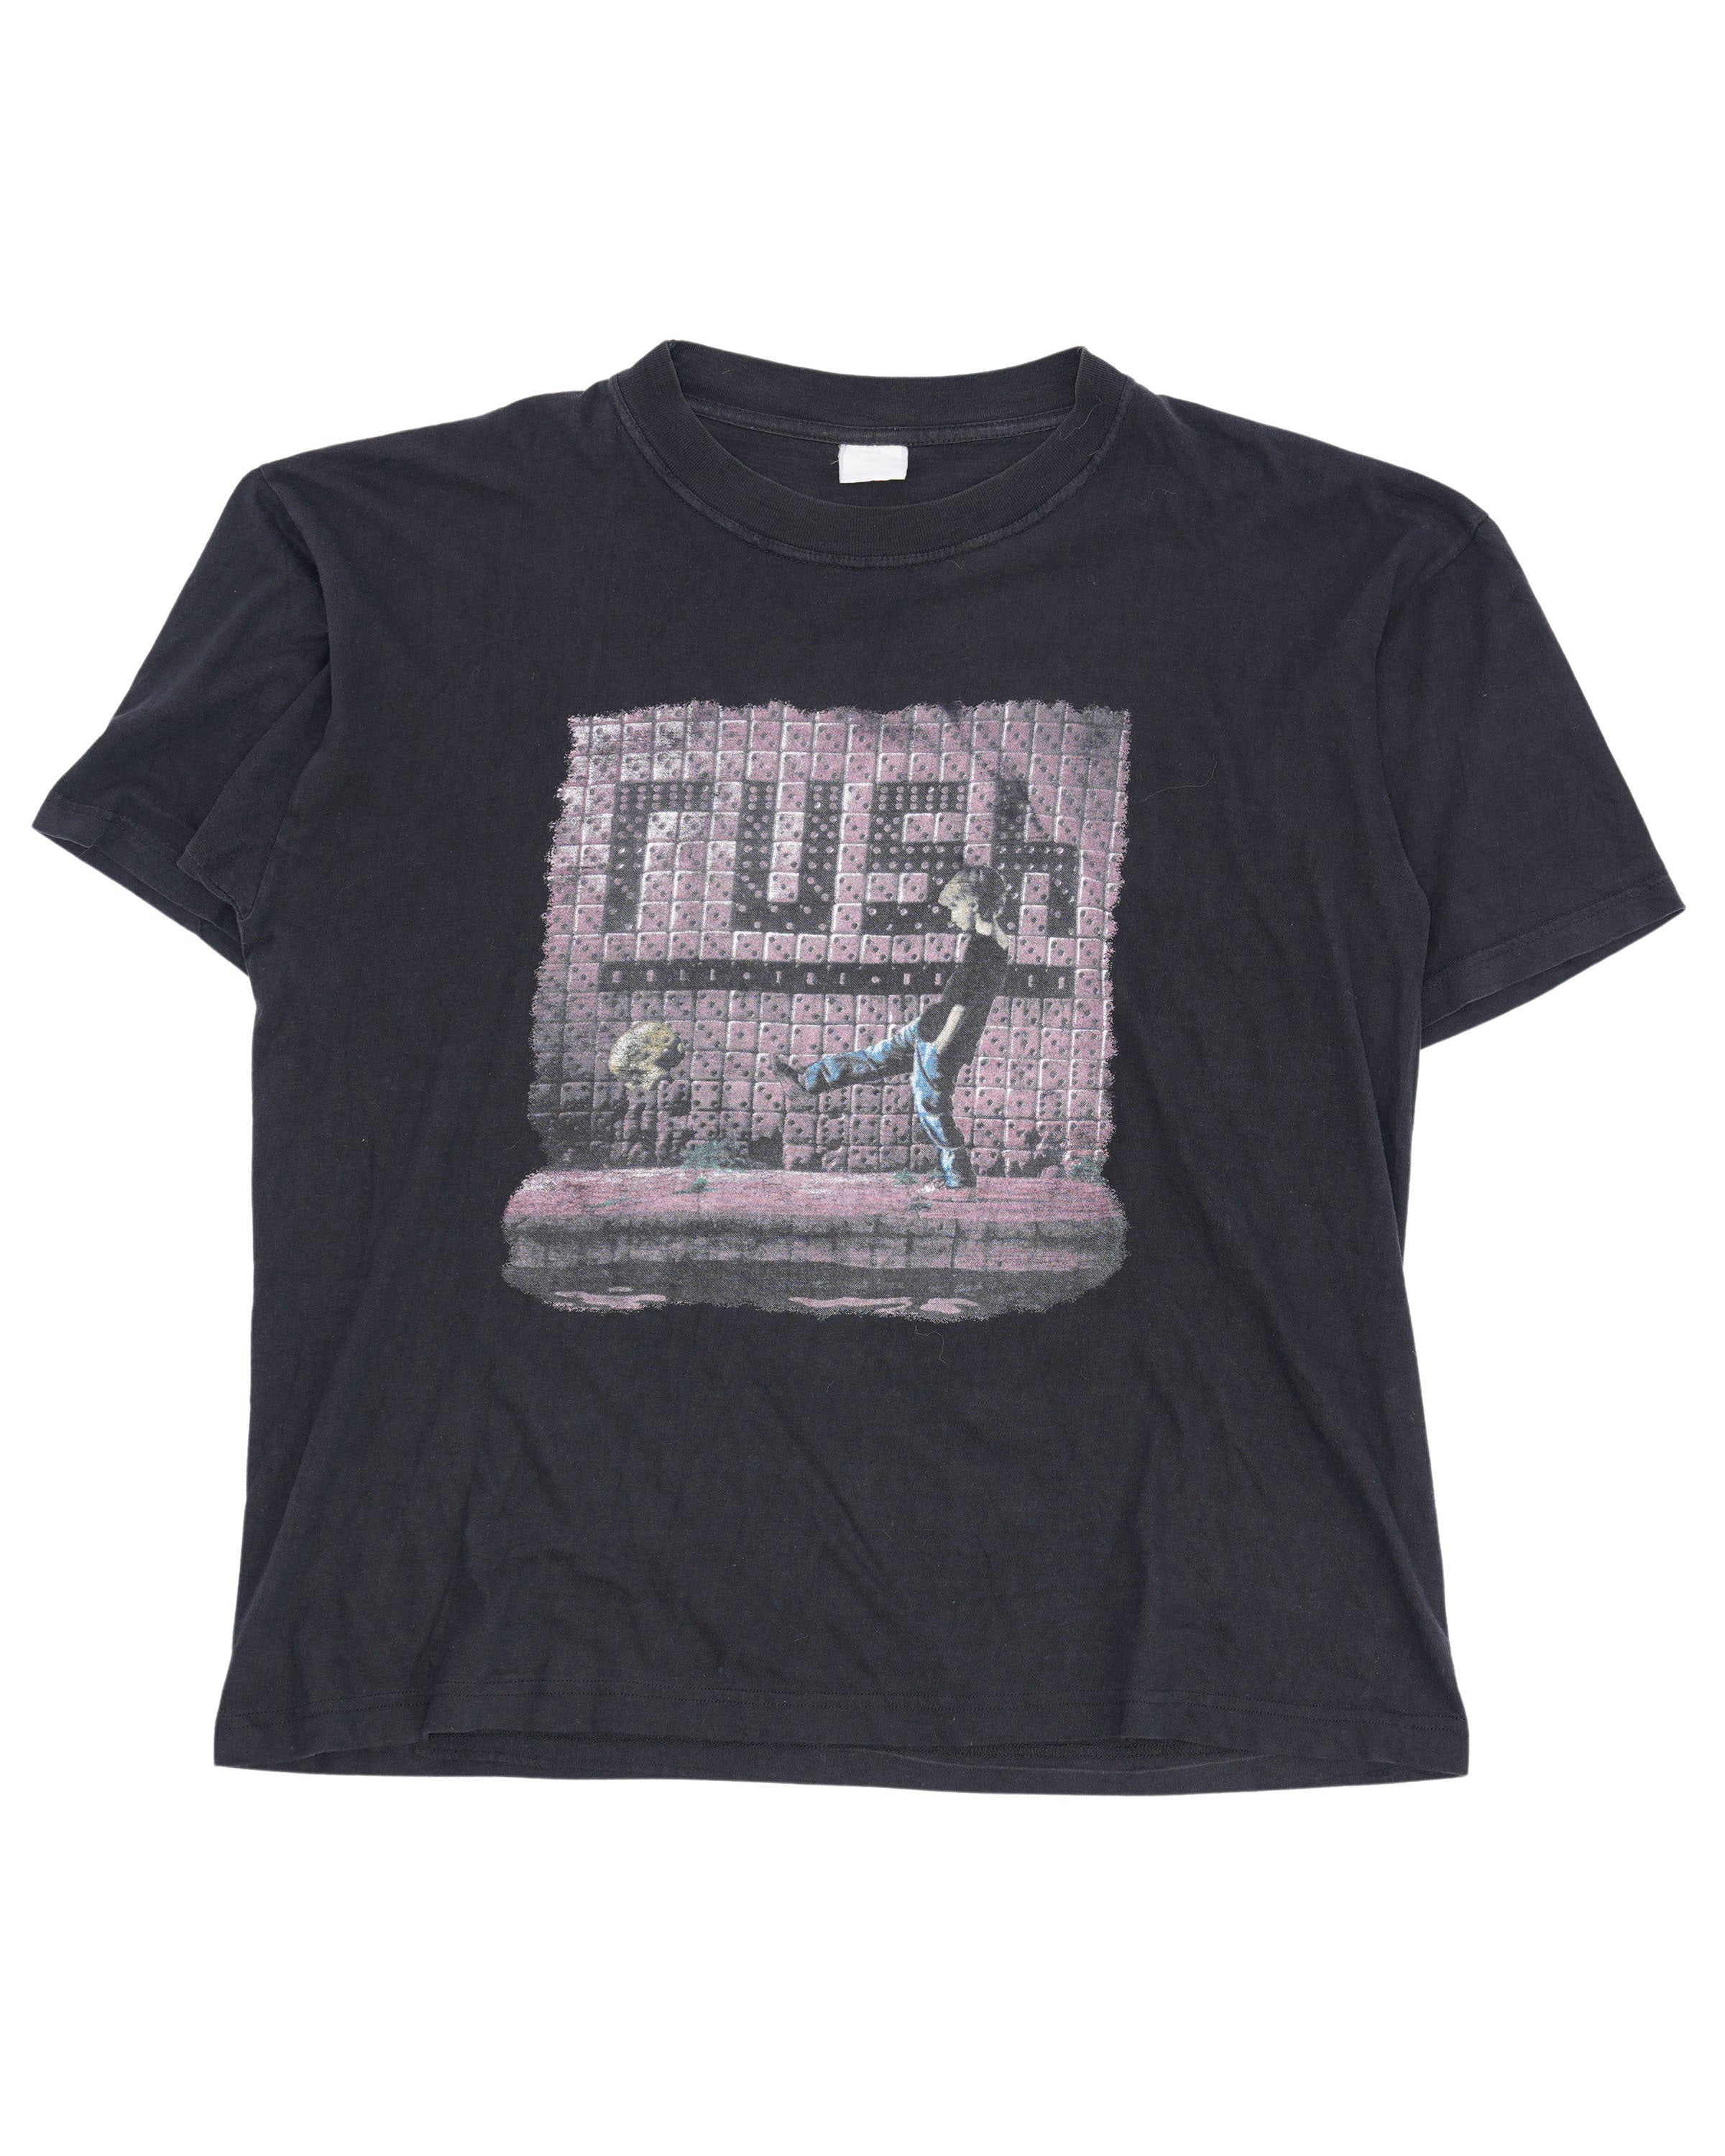 Rush Roll The Bones T-Shirt